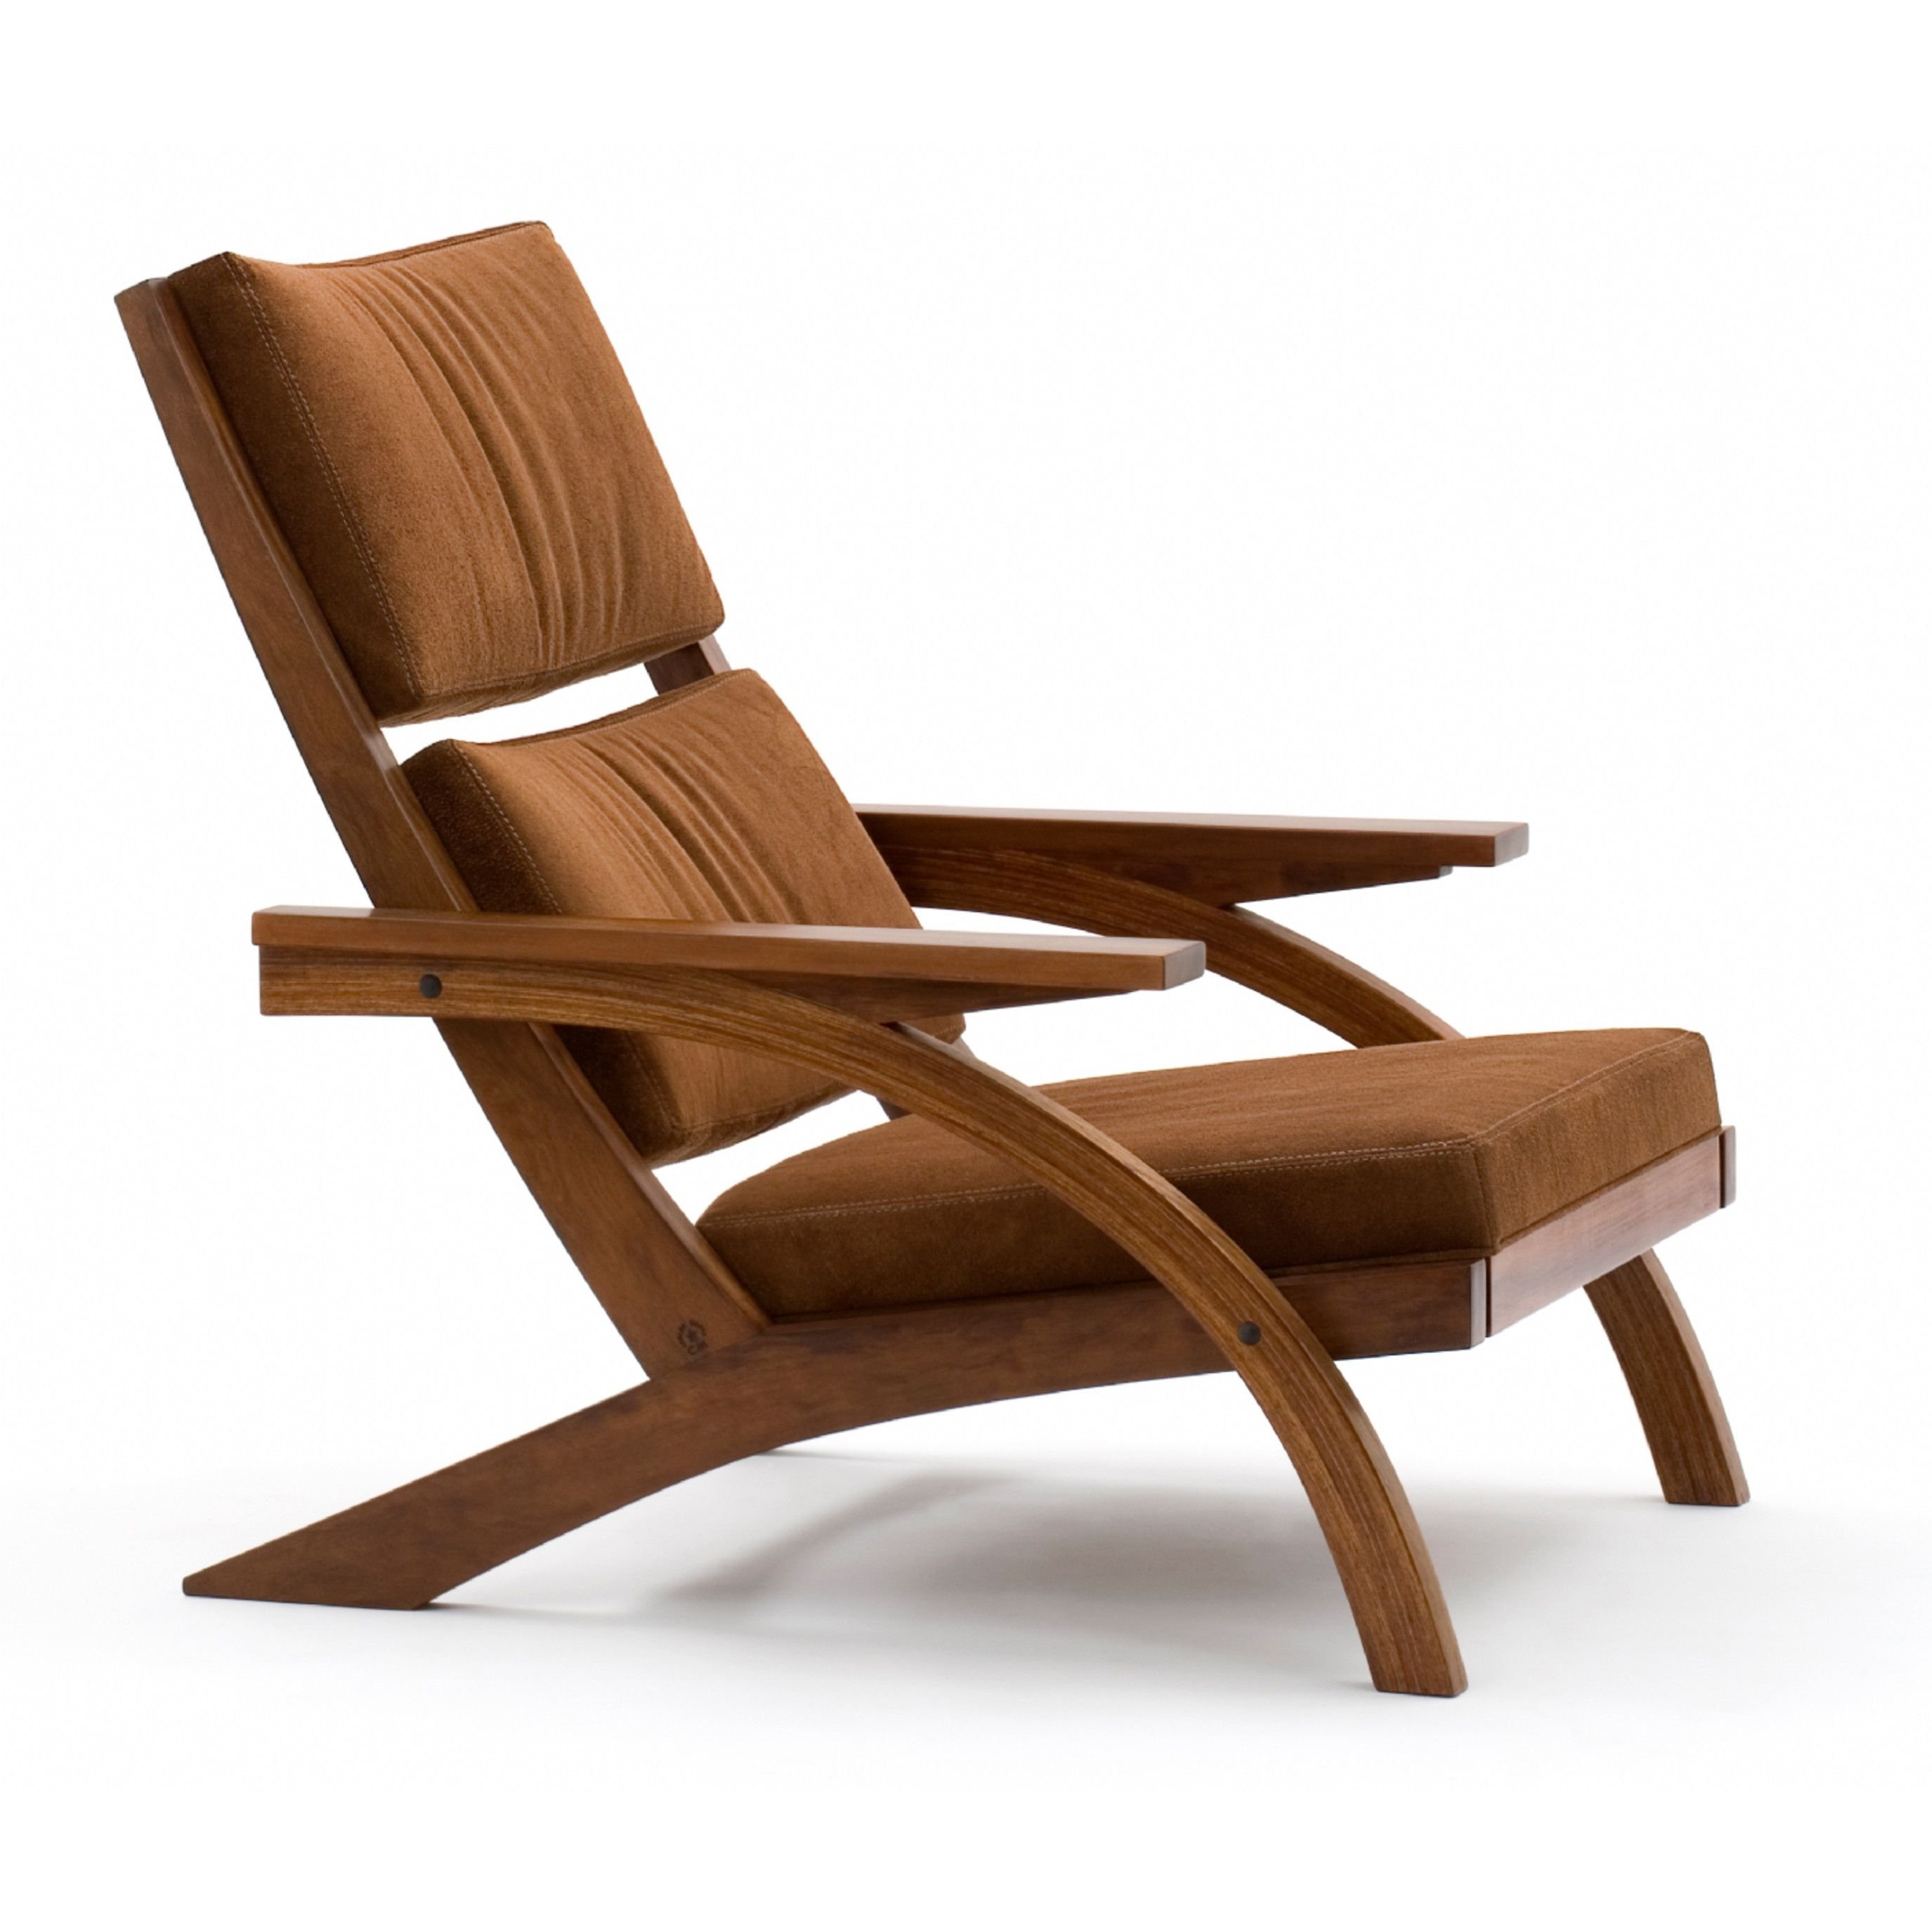 Wooden chair. Кресло конференц 560*650*910мм каркас массив дерева. Кресло из массива дерева Canda. Кресло отдыха Вега-10. Кресло из гевеи lb-2570l.